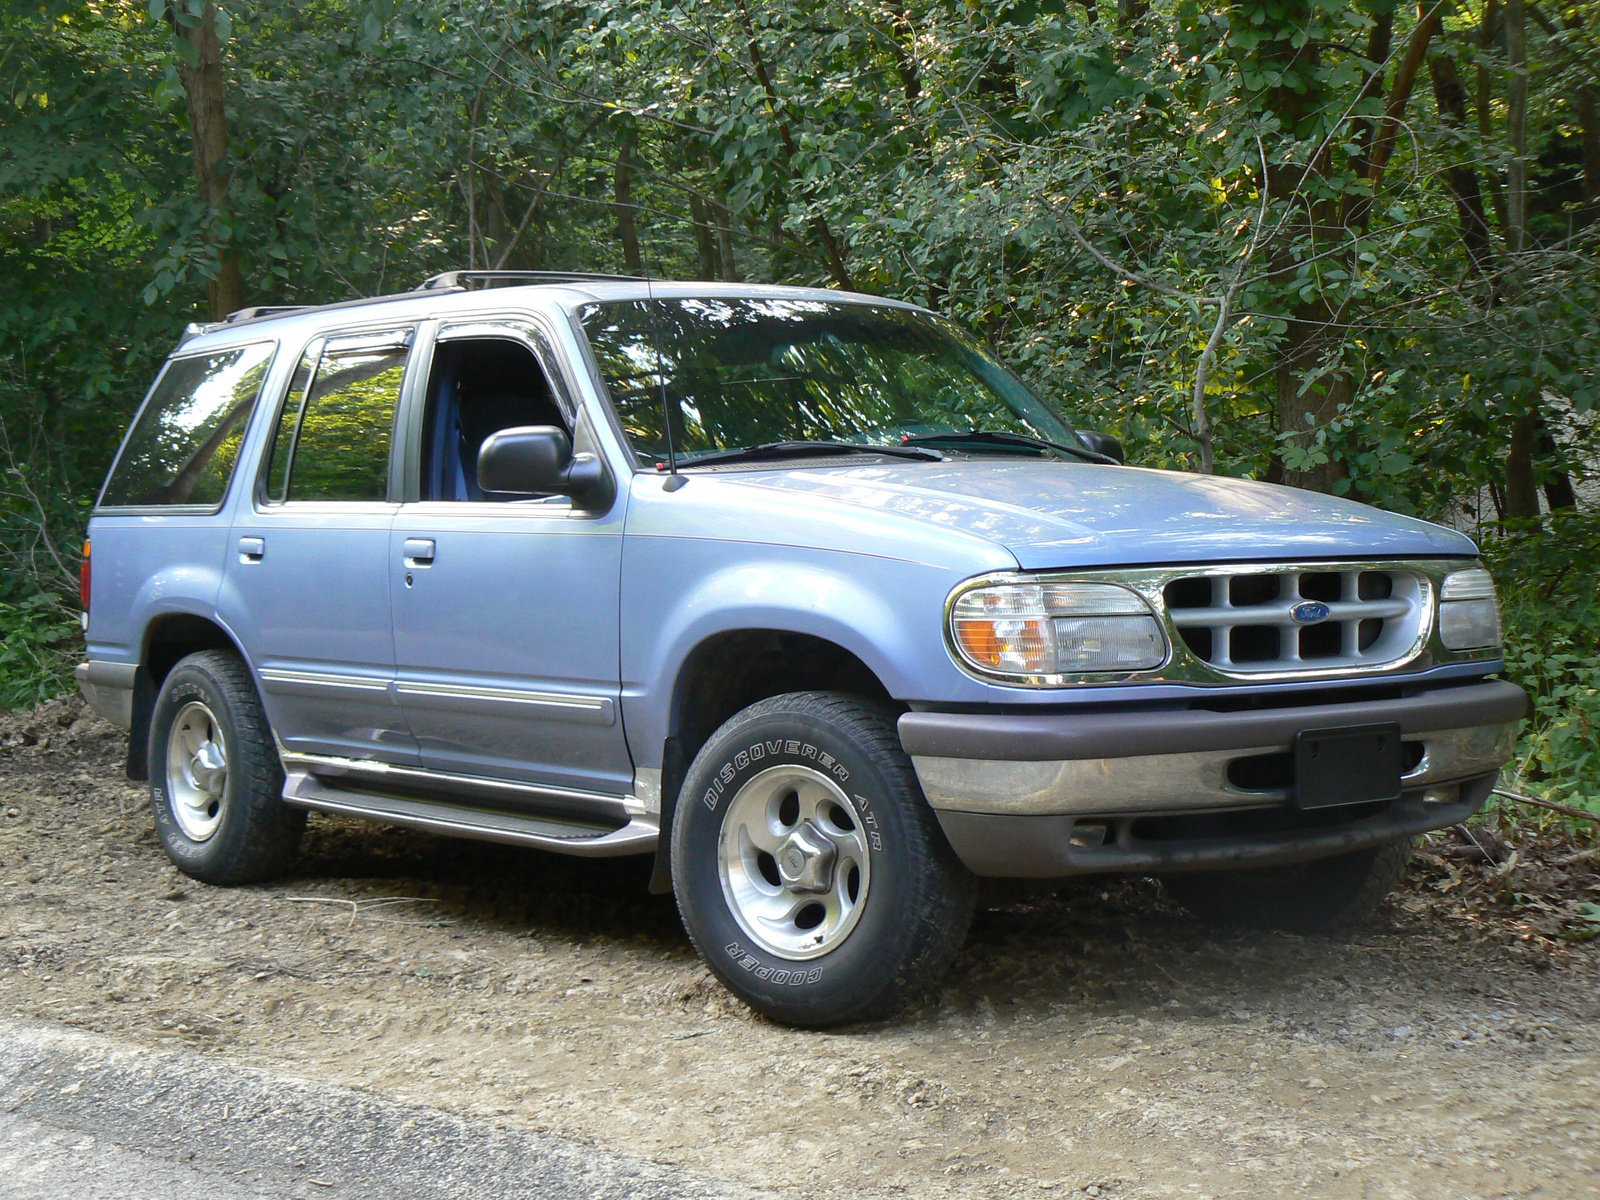 1997 Ford explorer xlt tire size #1